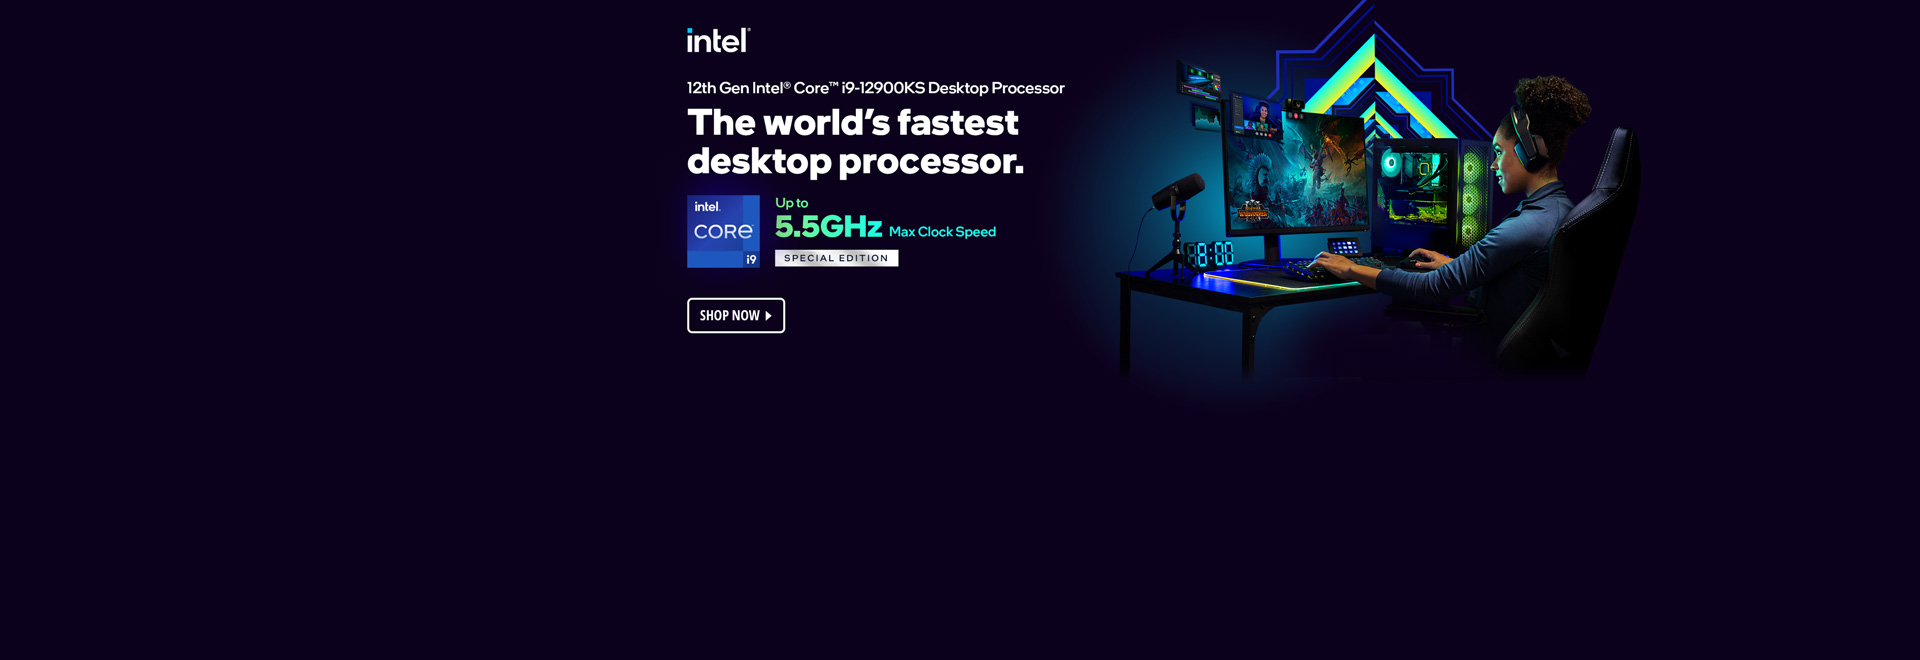 The world's fastest desktop processor